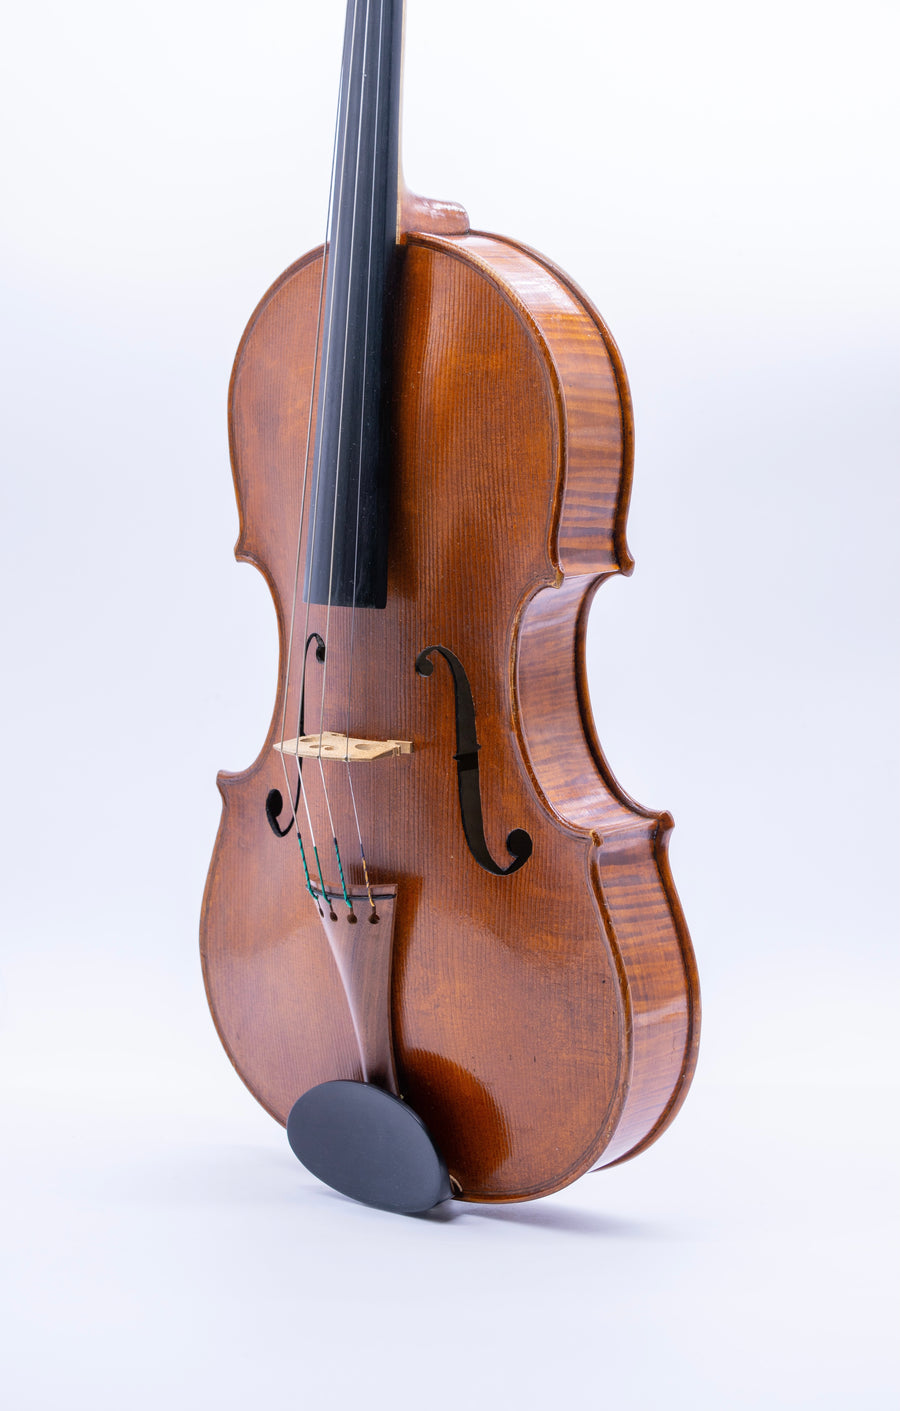 A Contemporary Viola By Gary Garavaglia, 2013. 17”